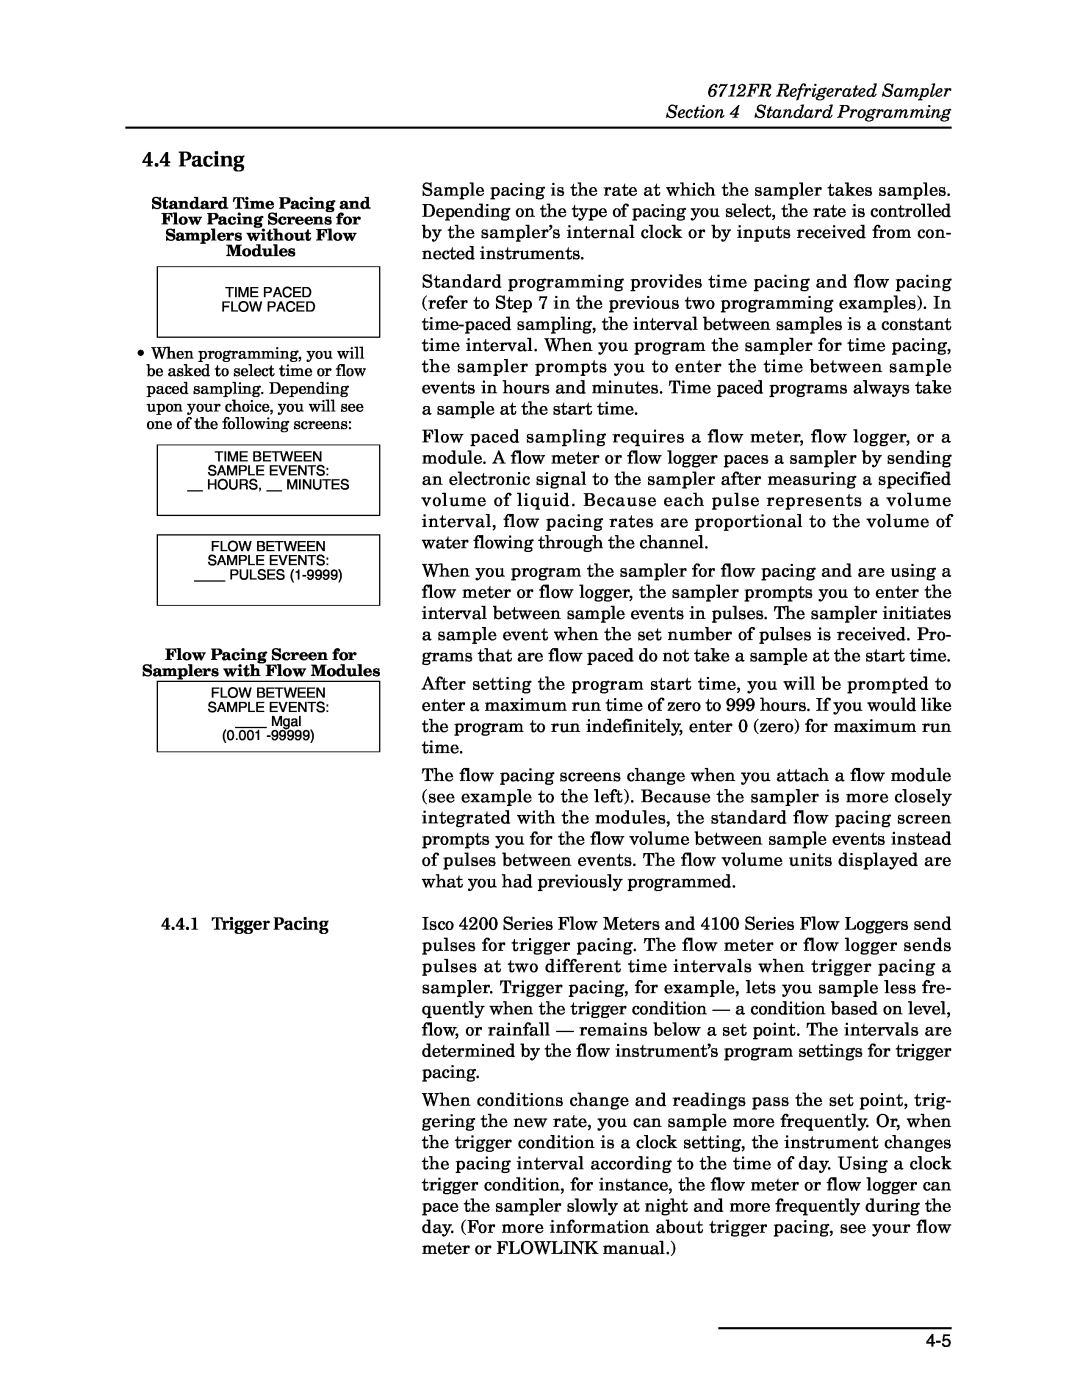 Teledyne manual 6712FR Refrigerated Sampler Standard Programming, Trigger Pacing 